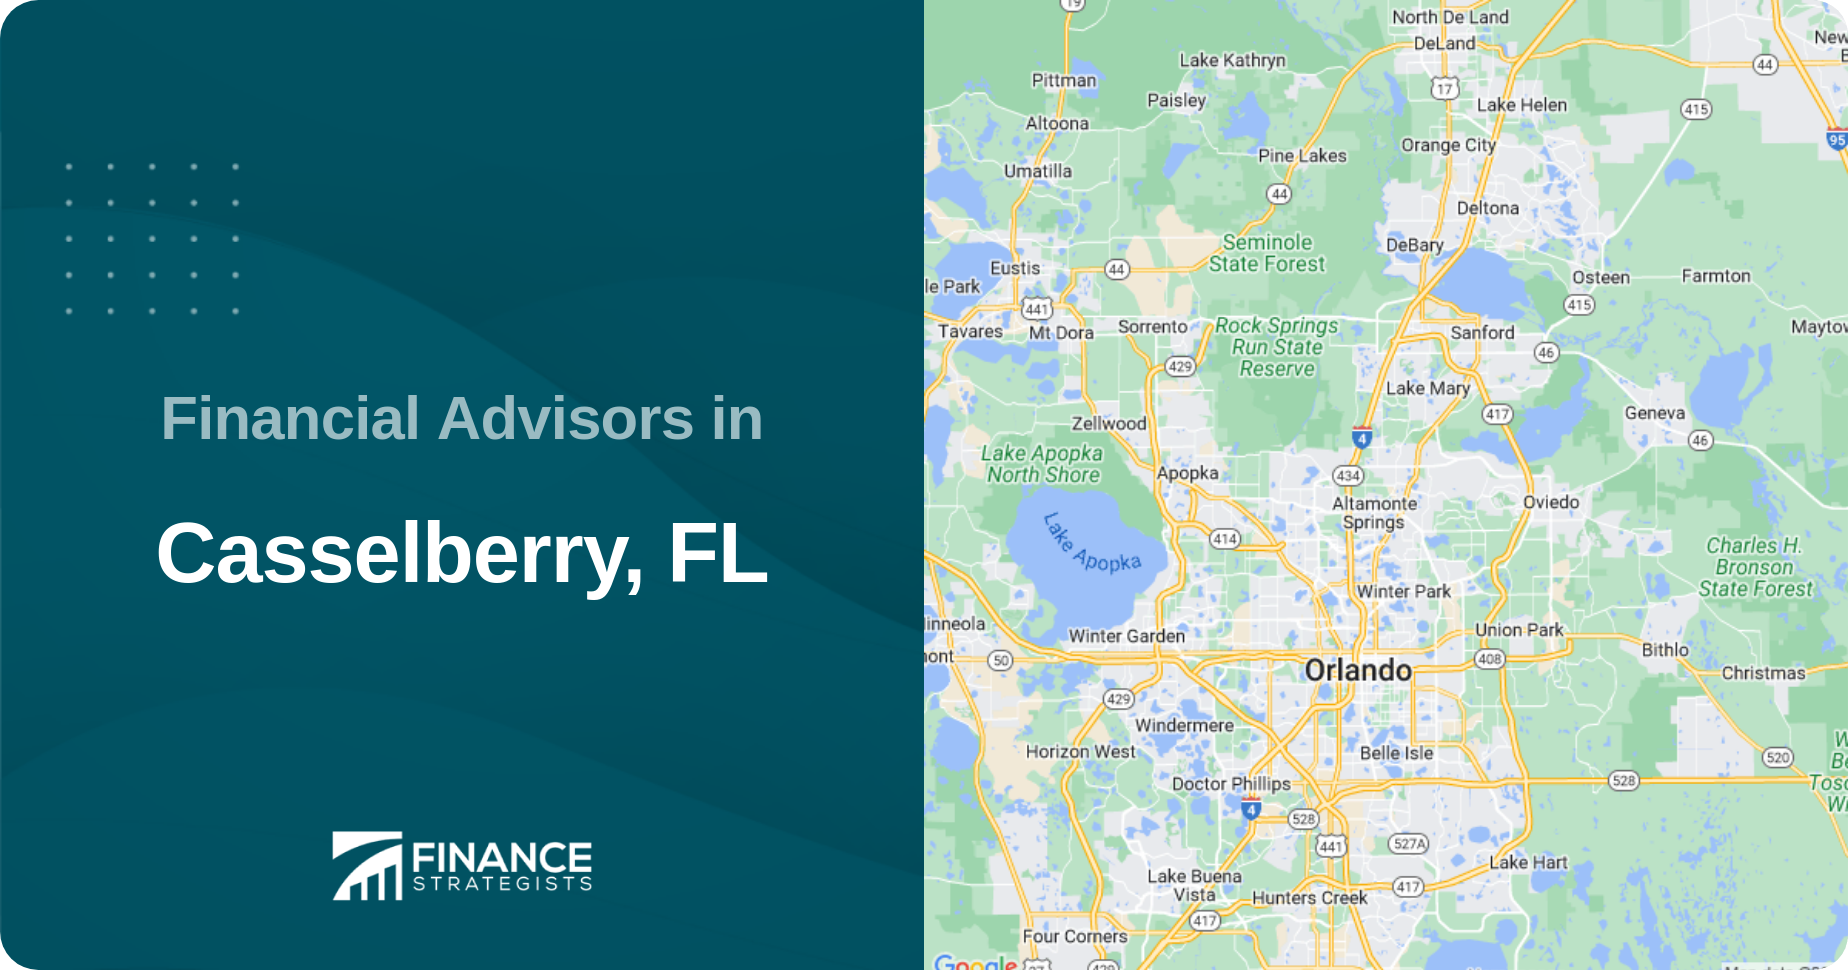 Financial Advisors in Casselberry, FL